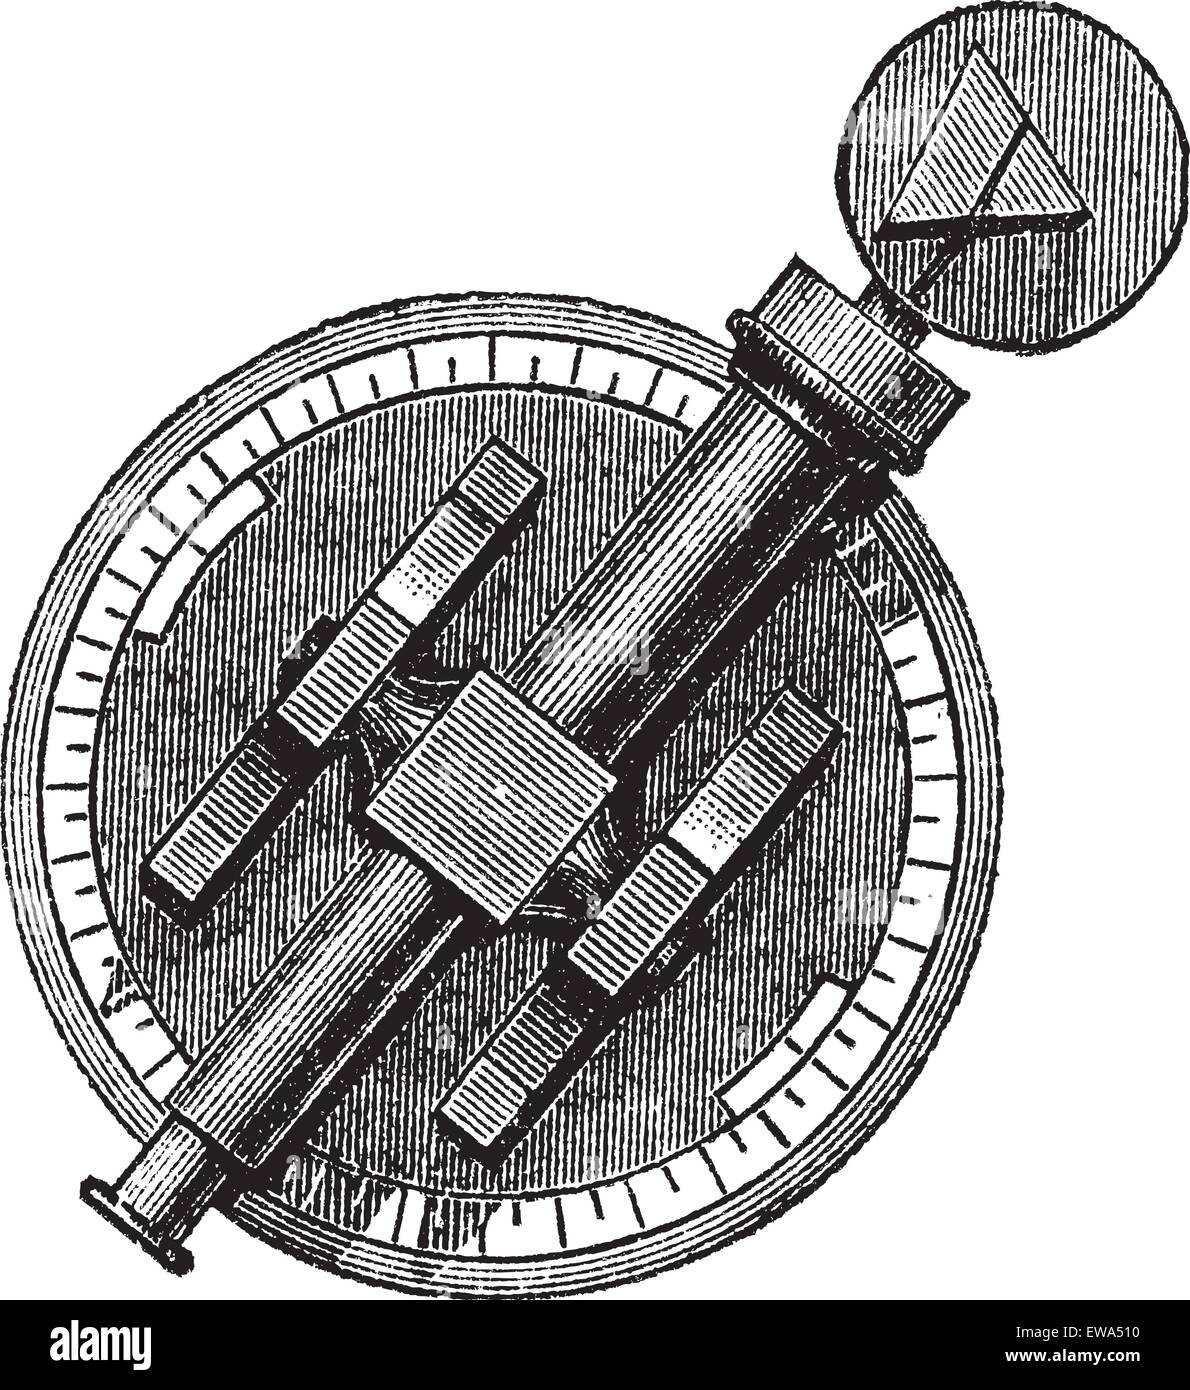 Spectroscope or Spectrometer or Spectrophotometer or Spectrograph, vintage engraving. Old engraved illustration of Spectroscope Stock Vector